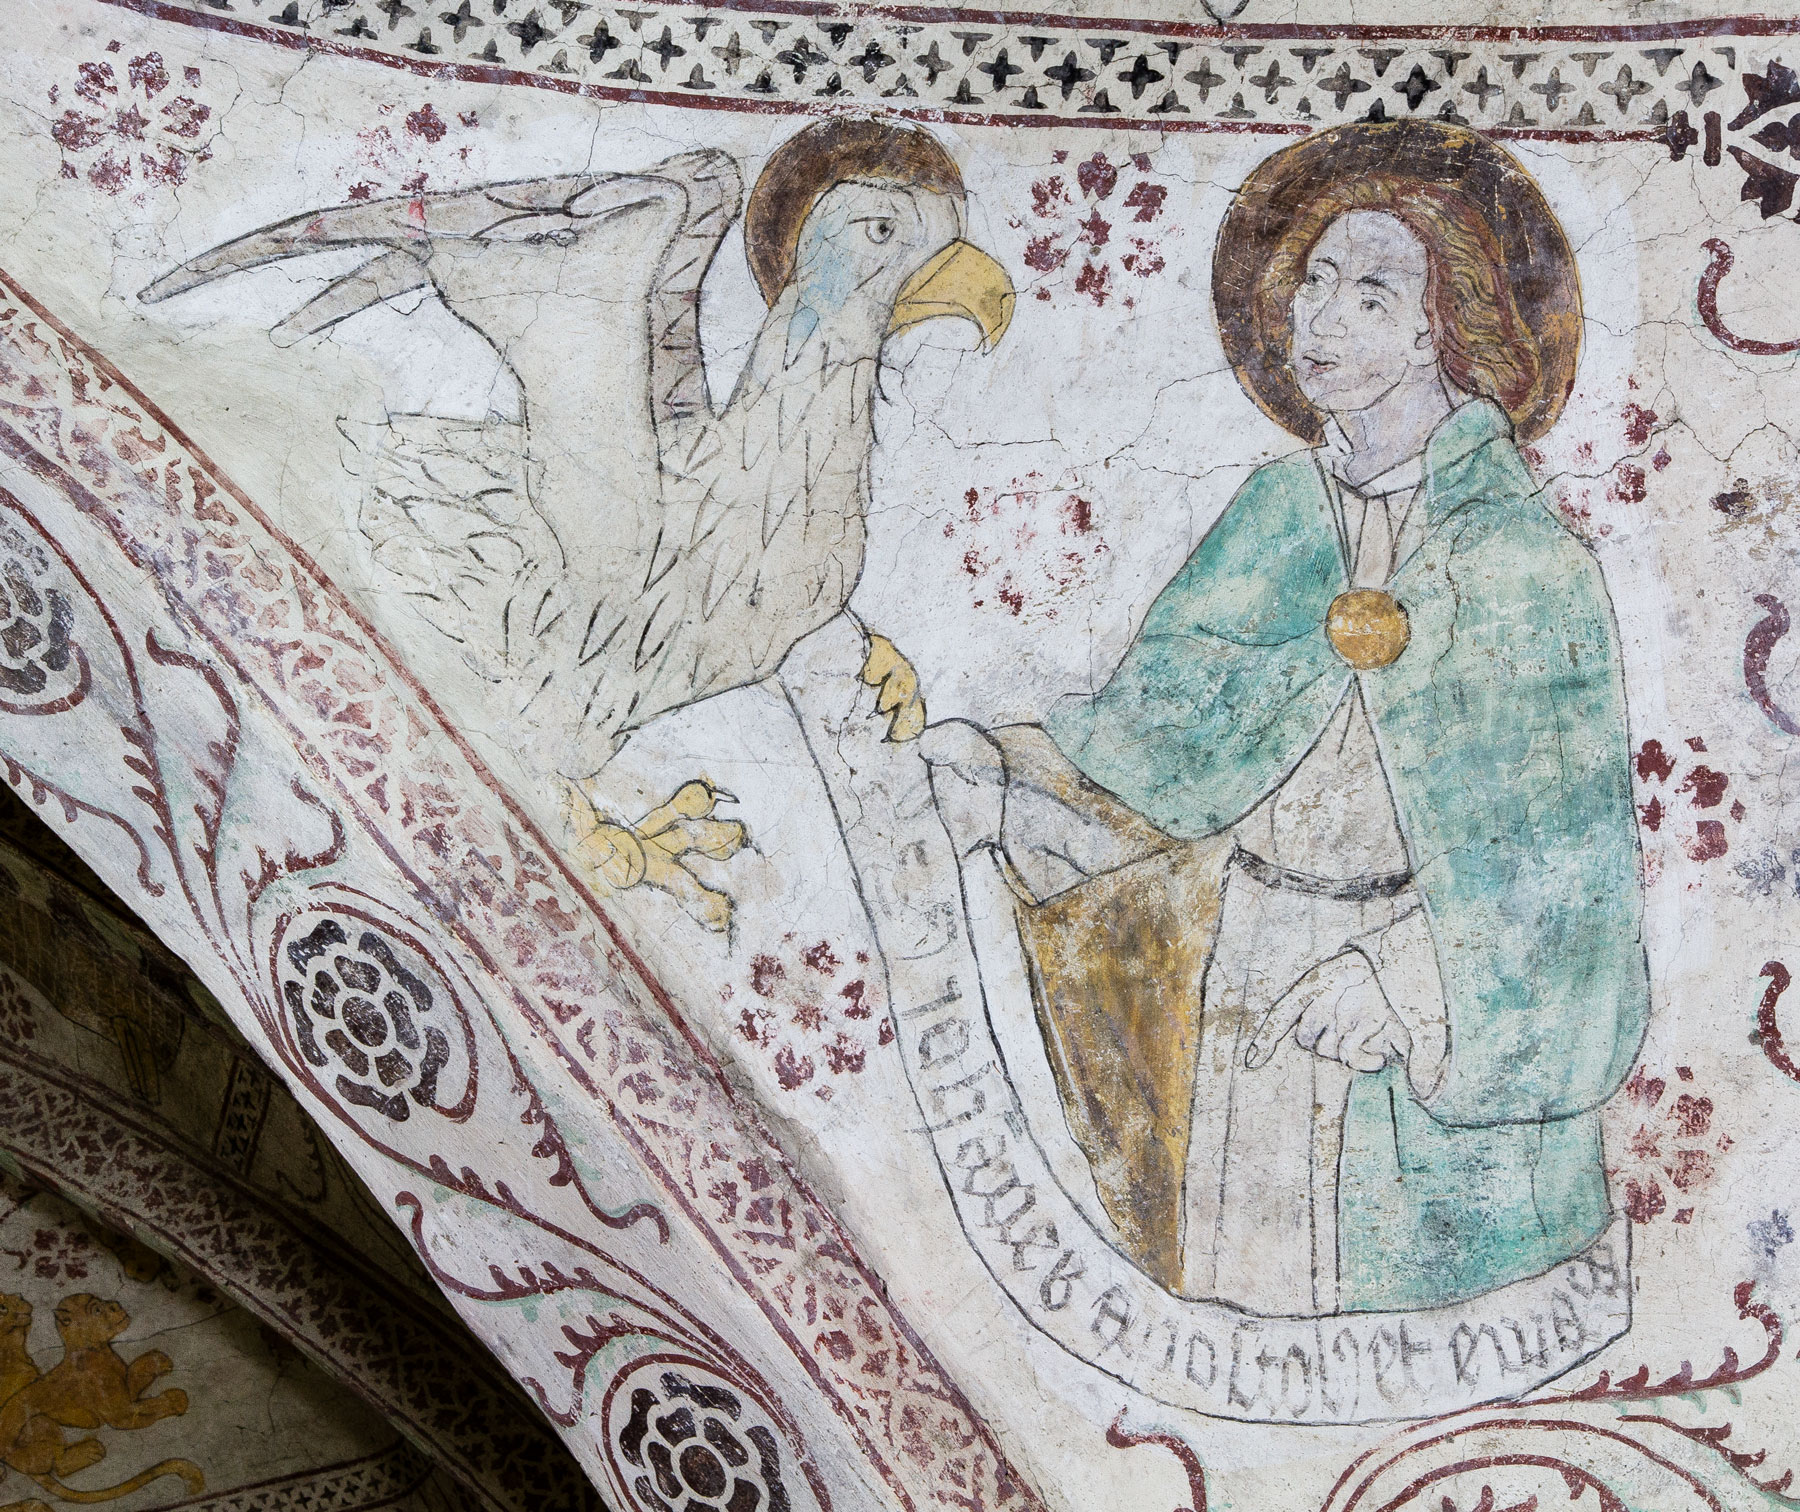 Evangelisten Johannes med sin symbol, örnen (S) - Almunge kyrka